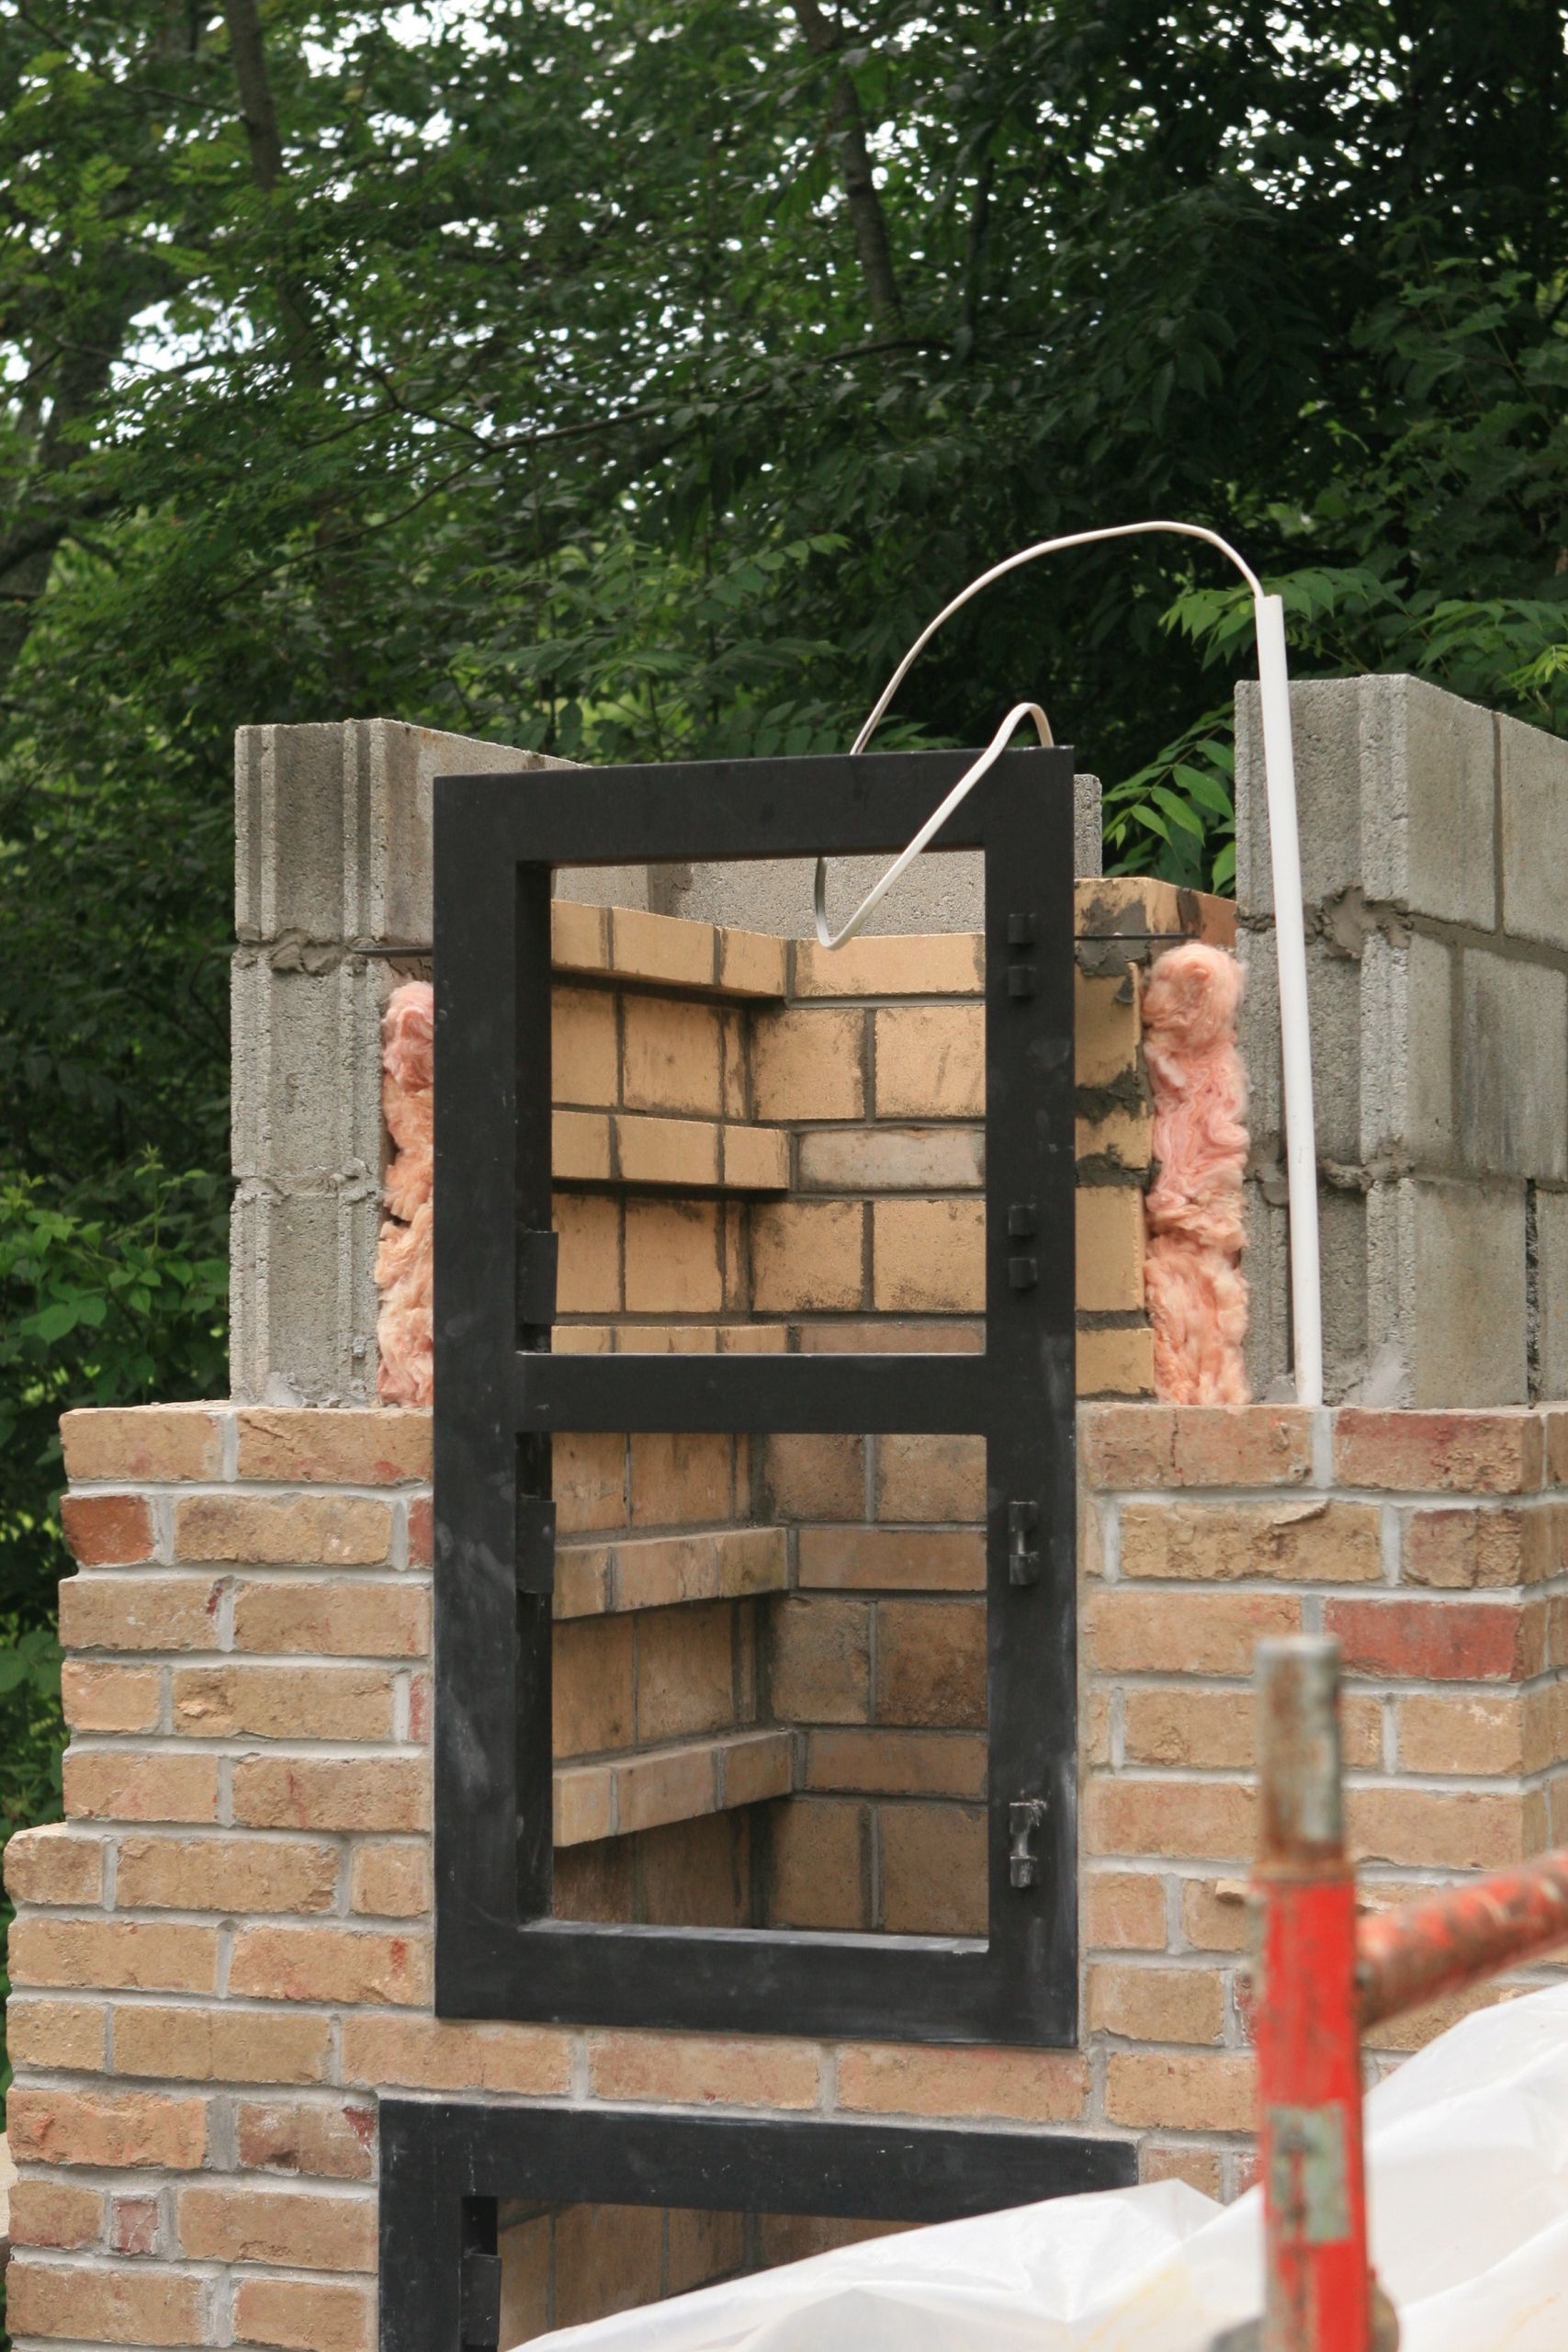 Brick Smoker Plans DIY
 How To Build A Brick Smoker